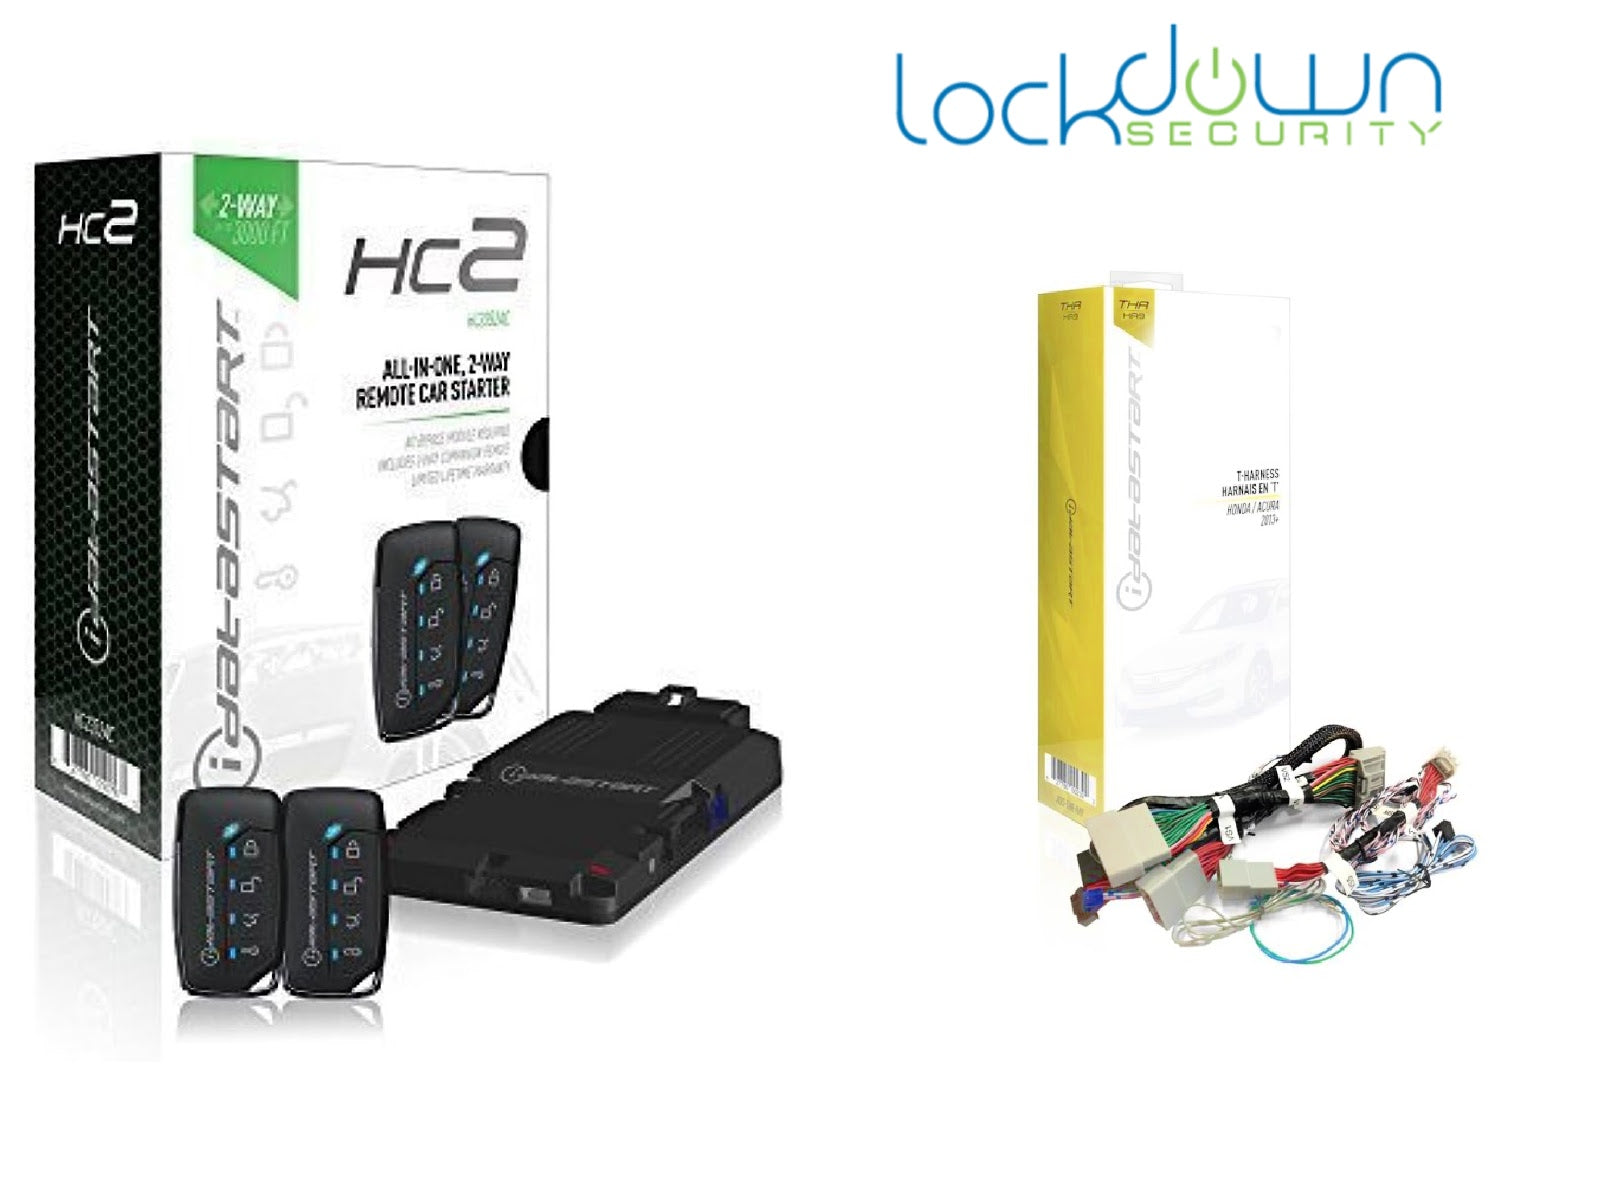 iDatastart HC2 with MA6 Plug and Play Harness - Lockdown Security